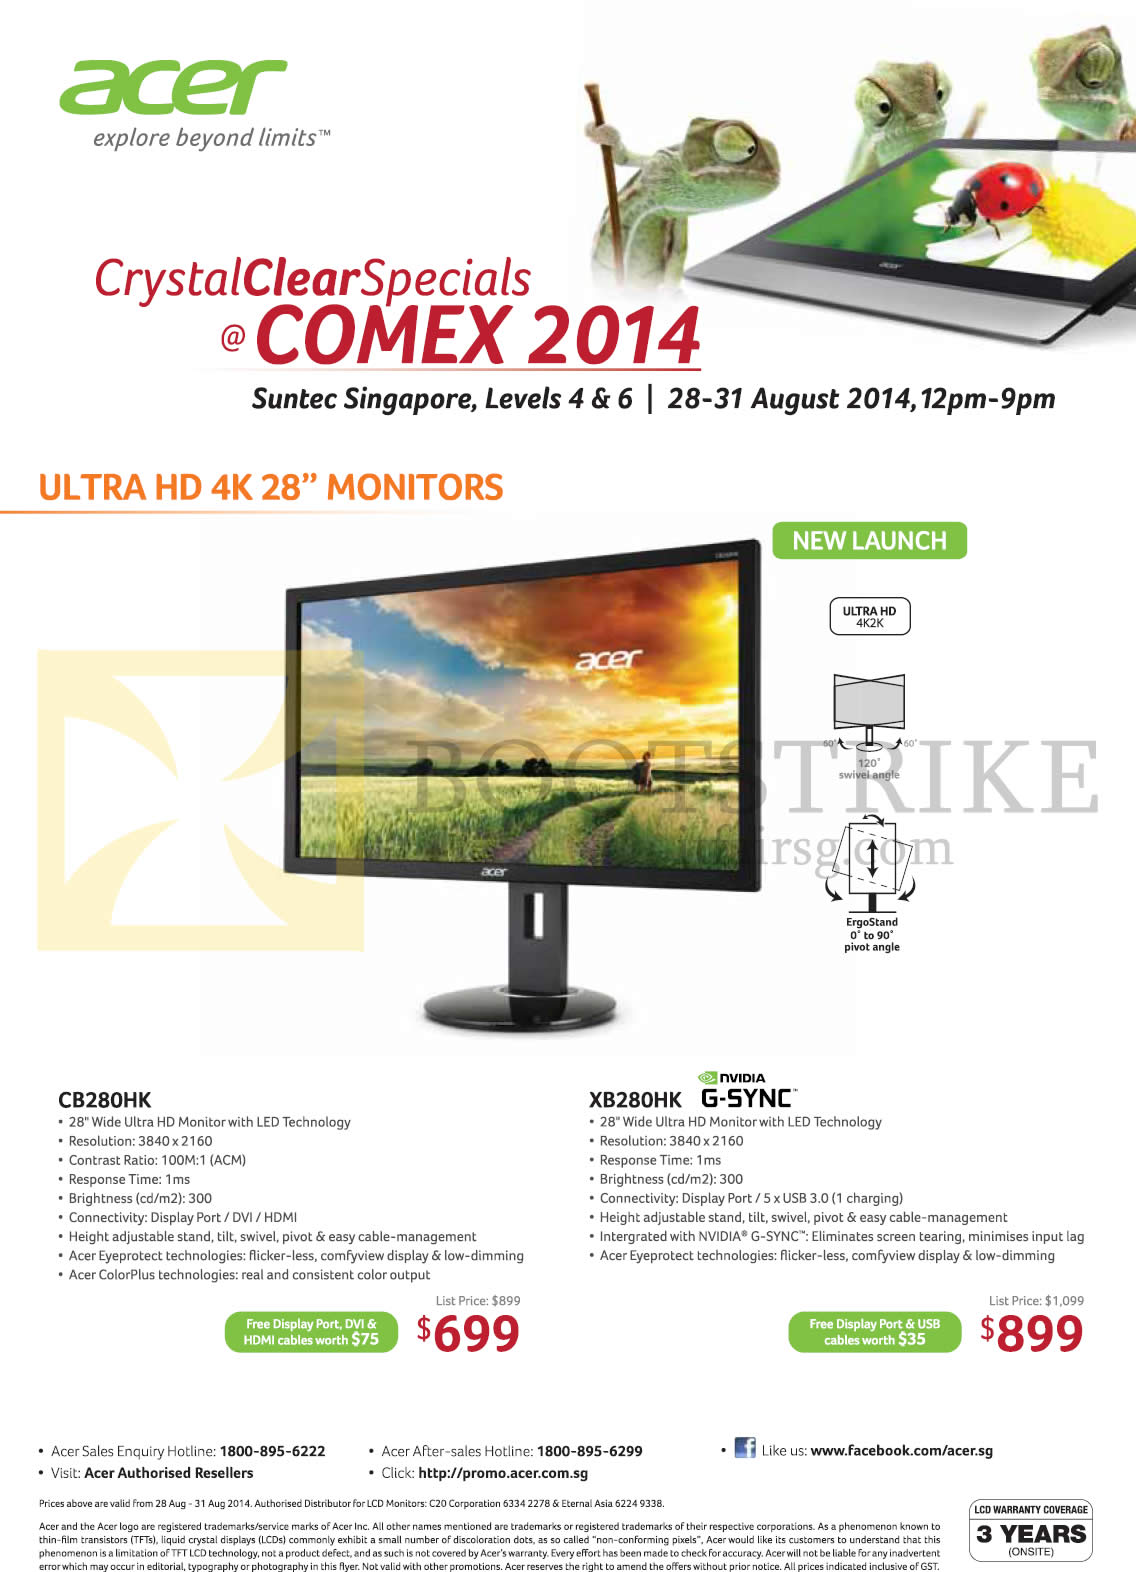 COMEX 2014 price list image brochure of Acer Monitors CB280HK, XB280HK